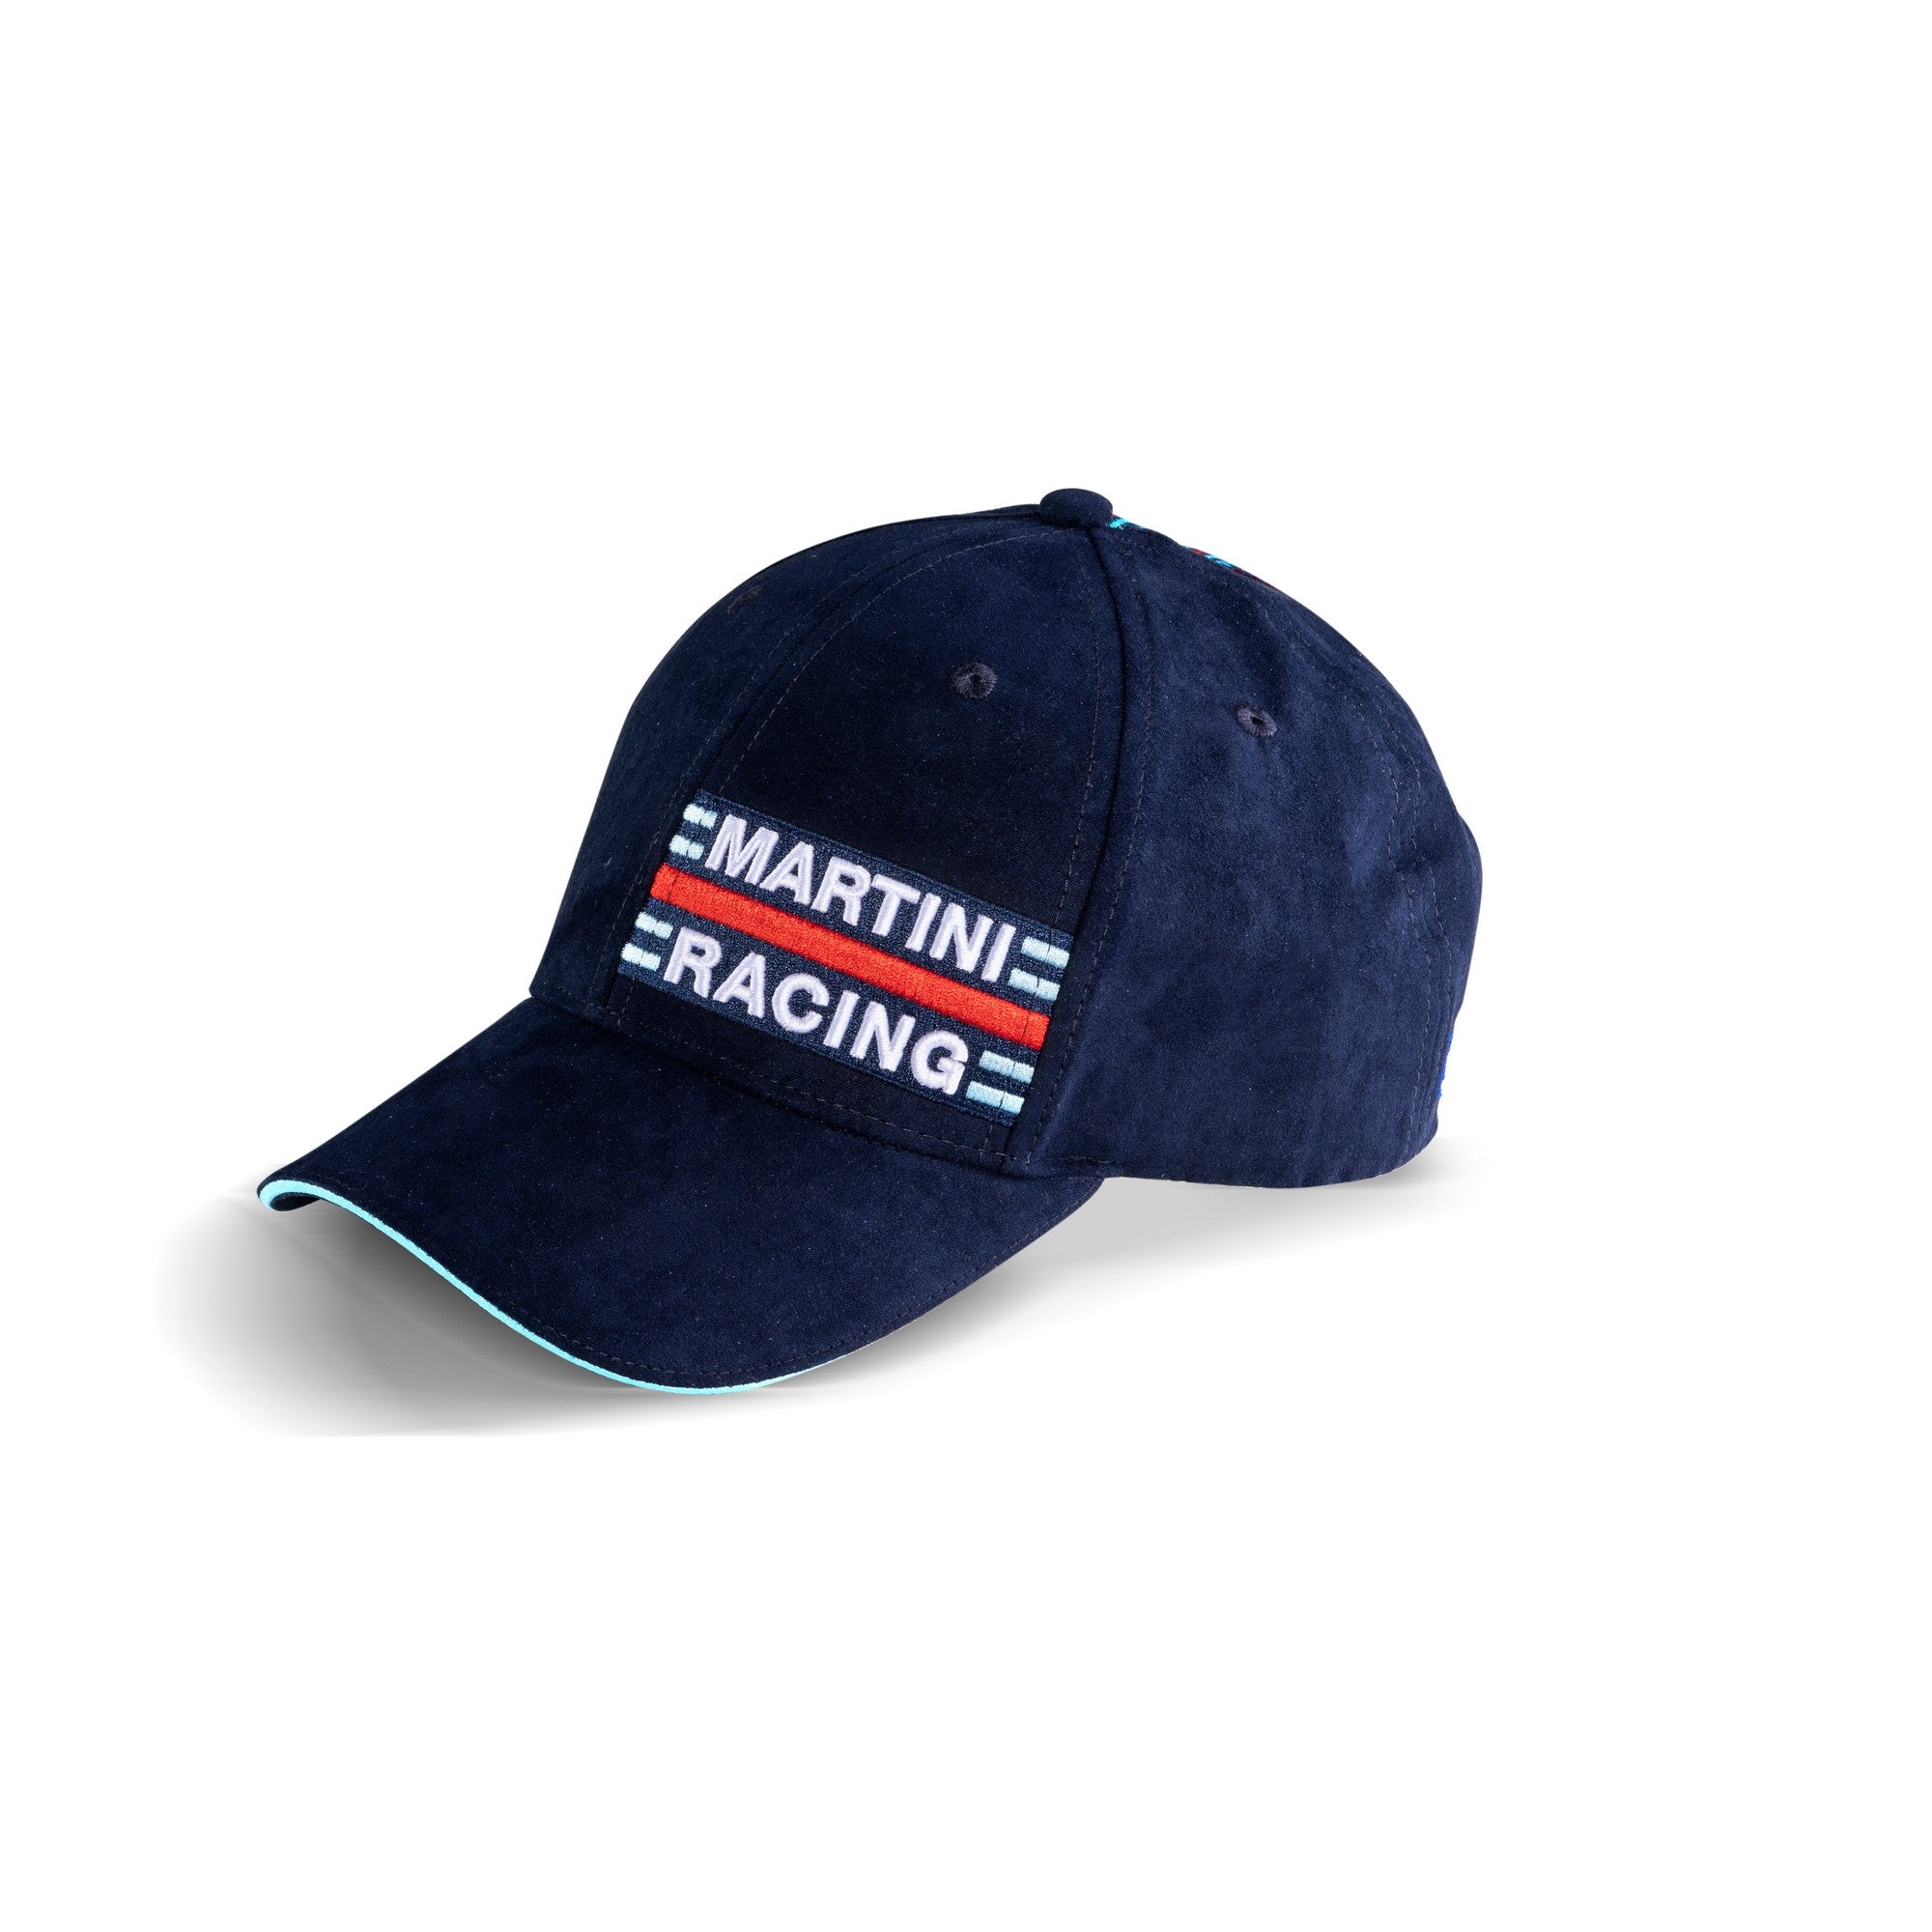 CAP SIDE LOGO MARTINI RACING - Sparco Shop